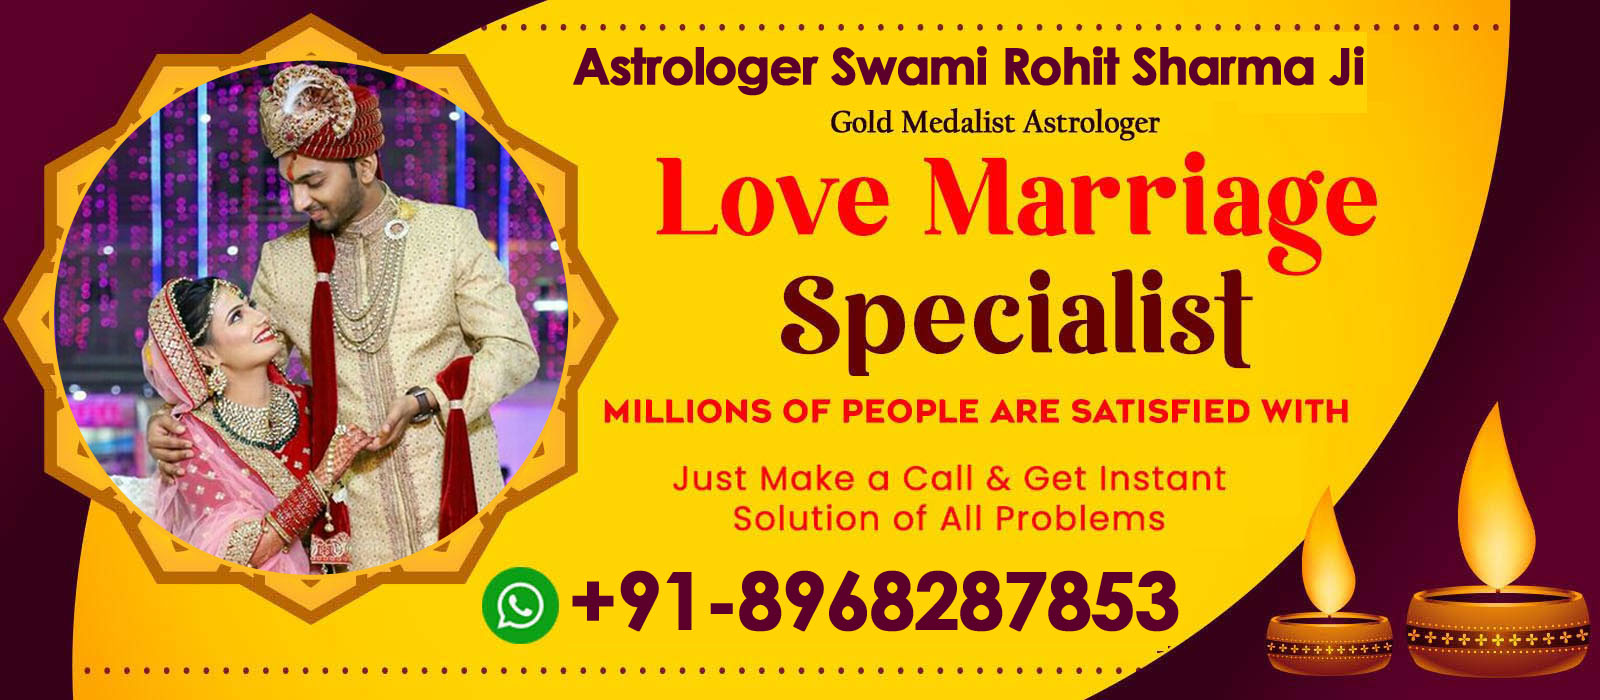 World Famous Astrologer Swami Rohit Sharma Ji +91-8968287853